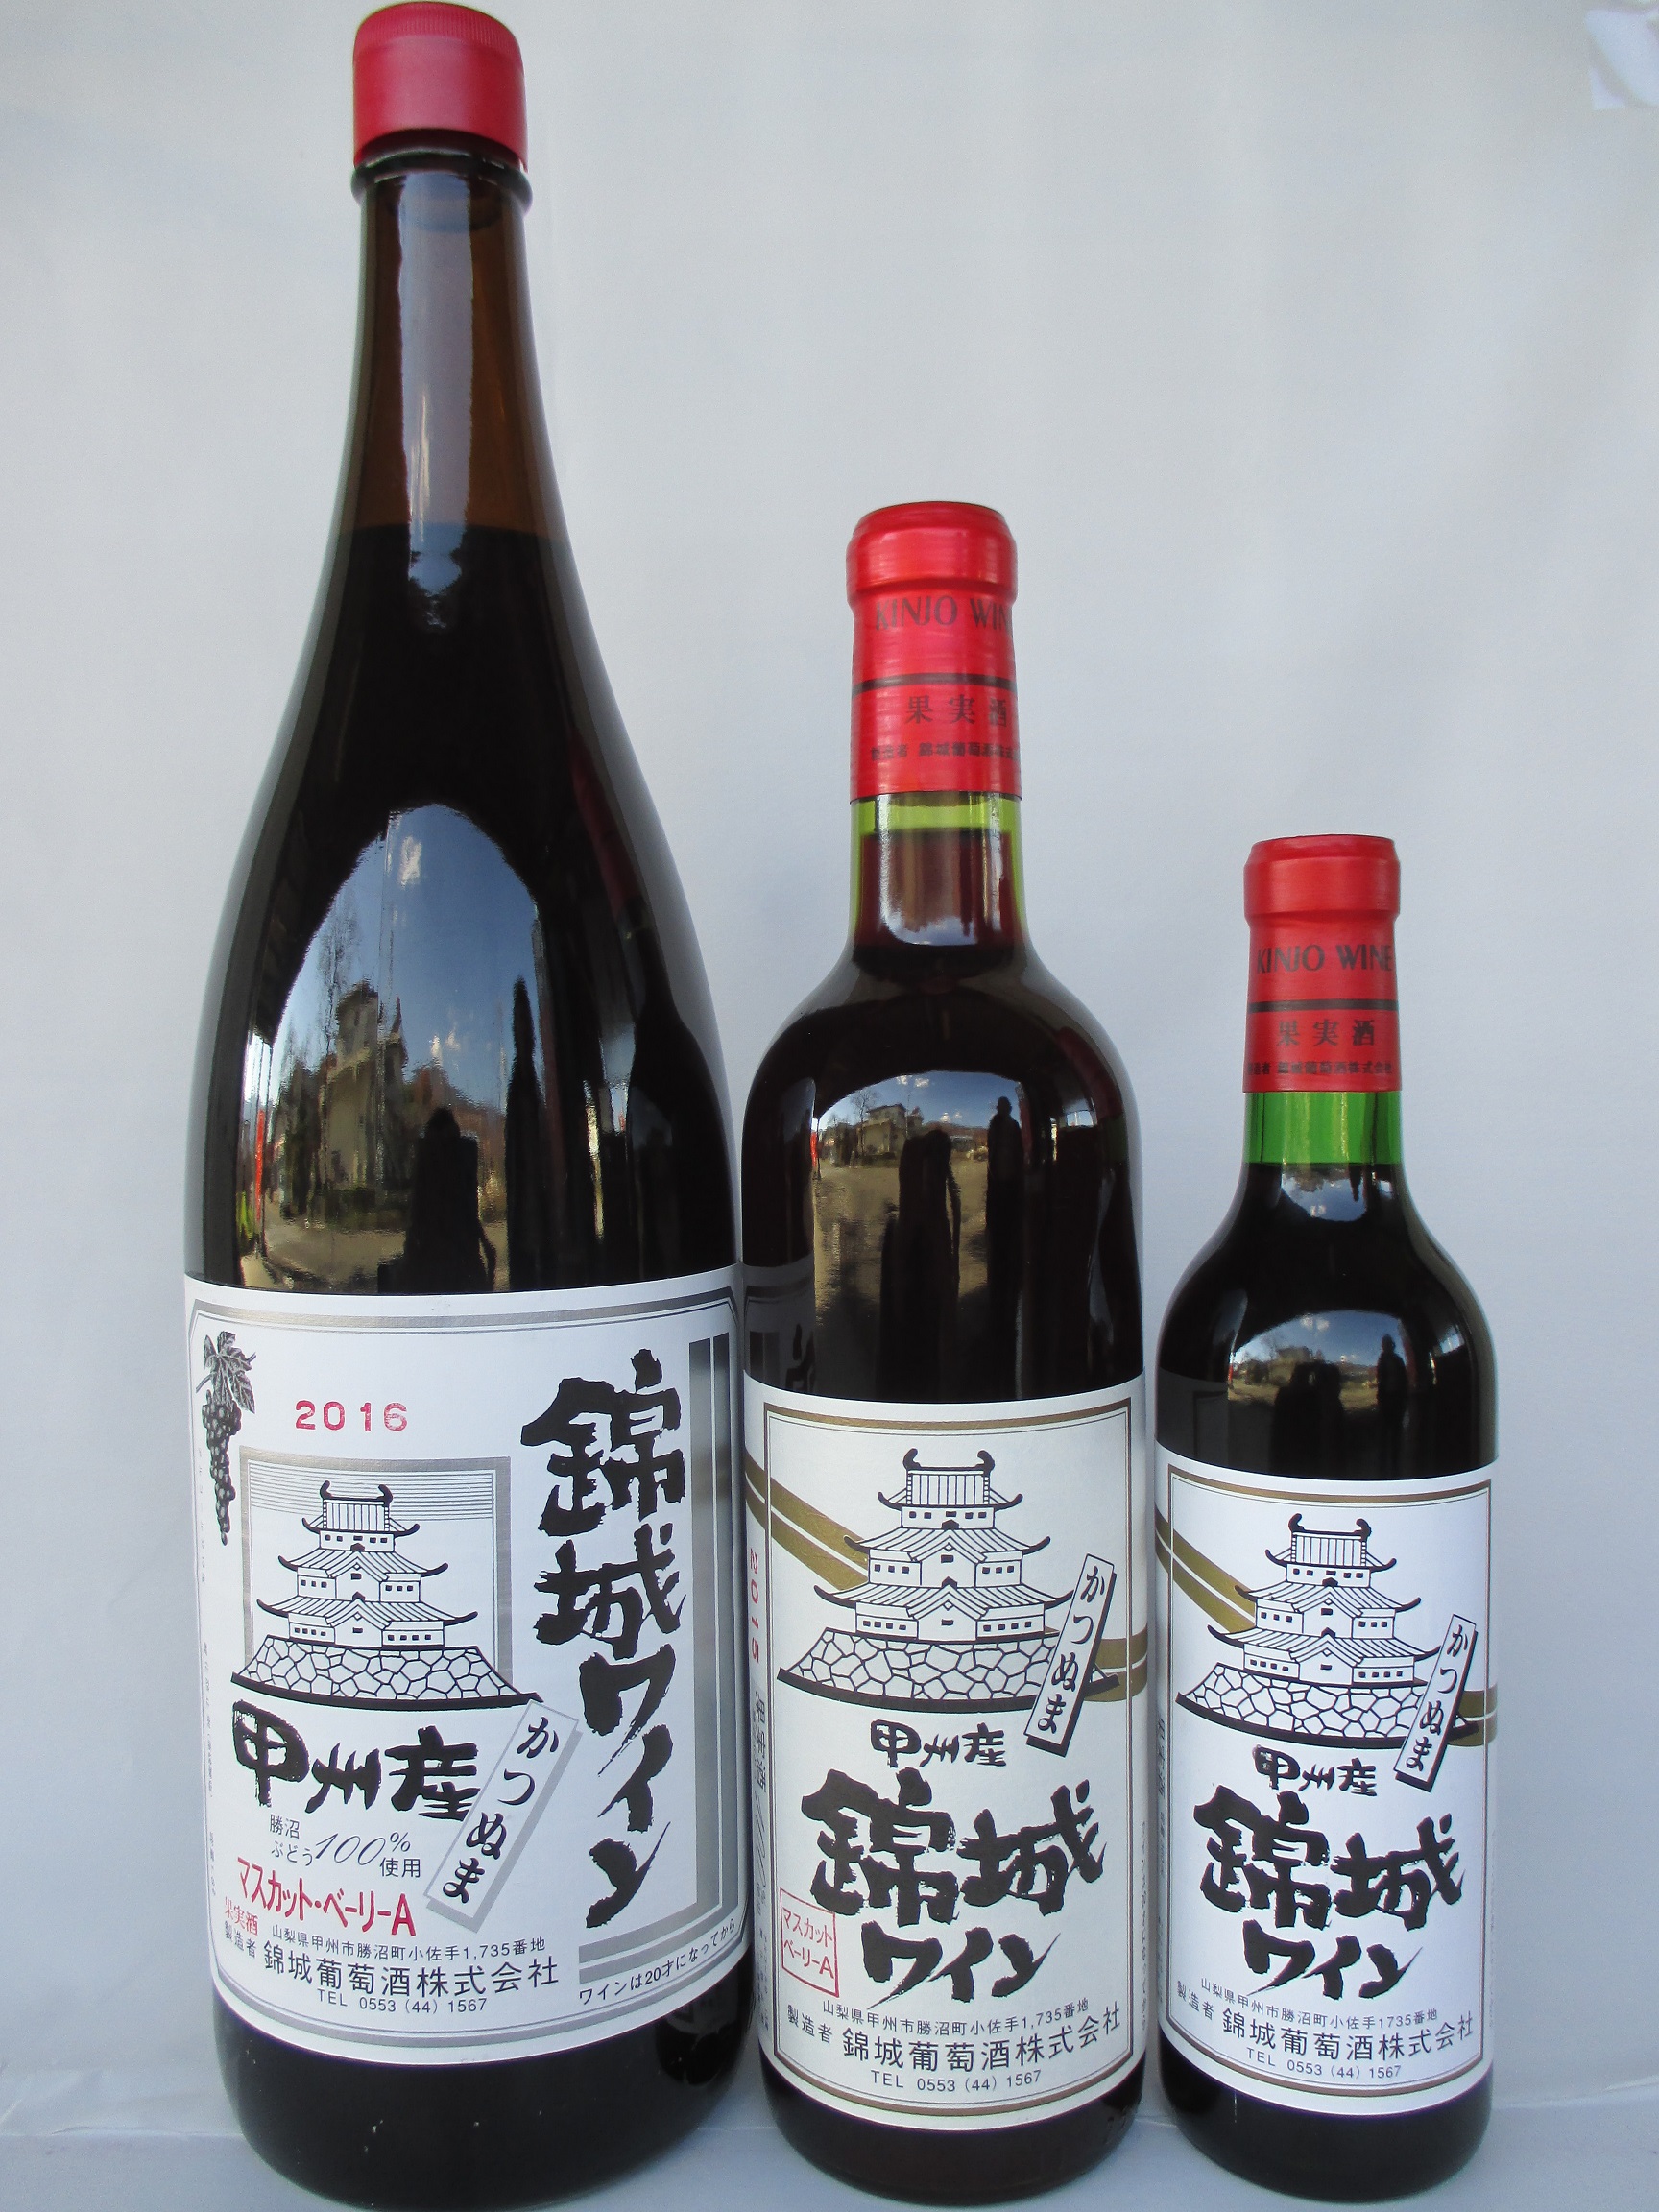 Kinjyo wine red